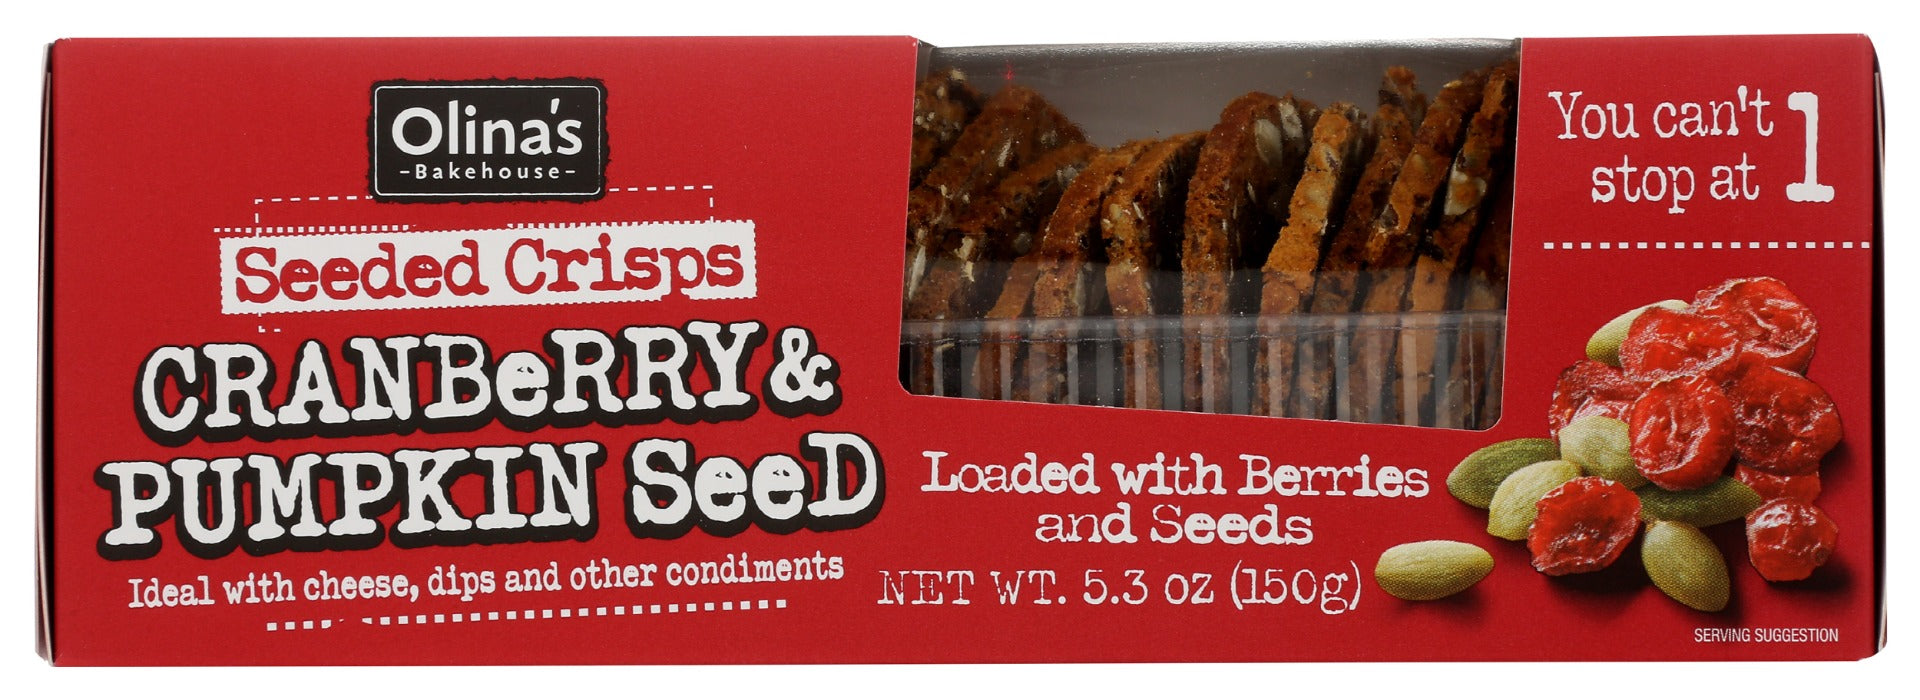 OLINAS BAKEHOUSE: Cranberry & Pumpkin Seed Seeded Crisps, 5.3 oz